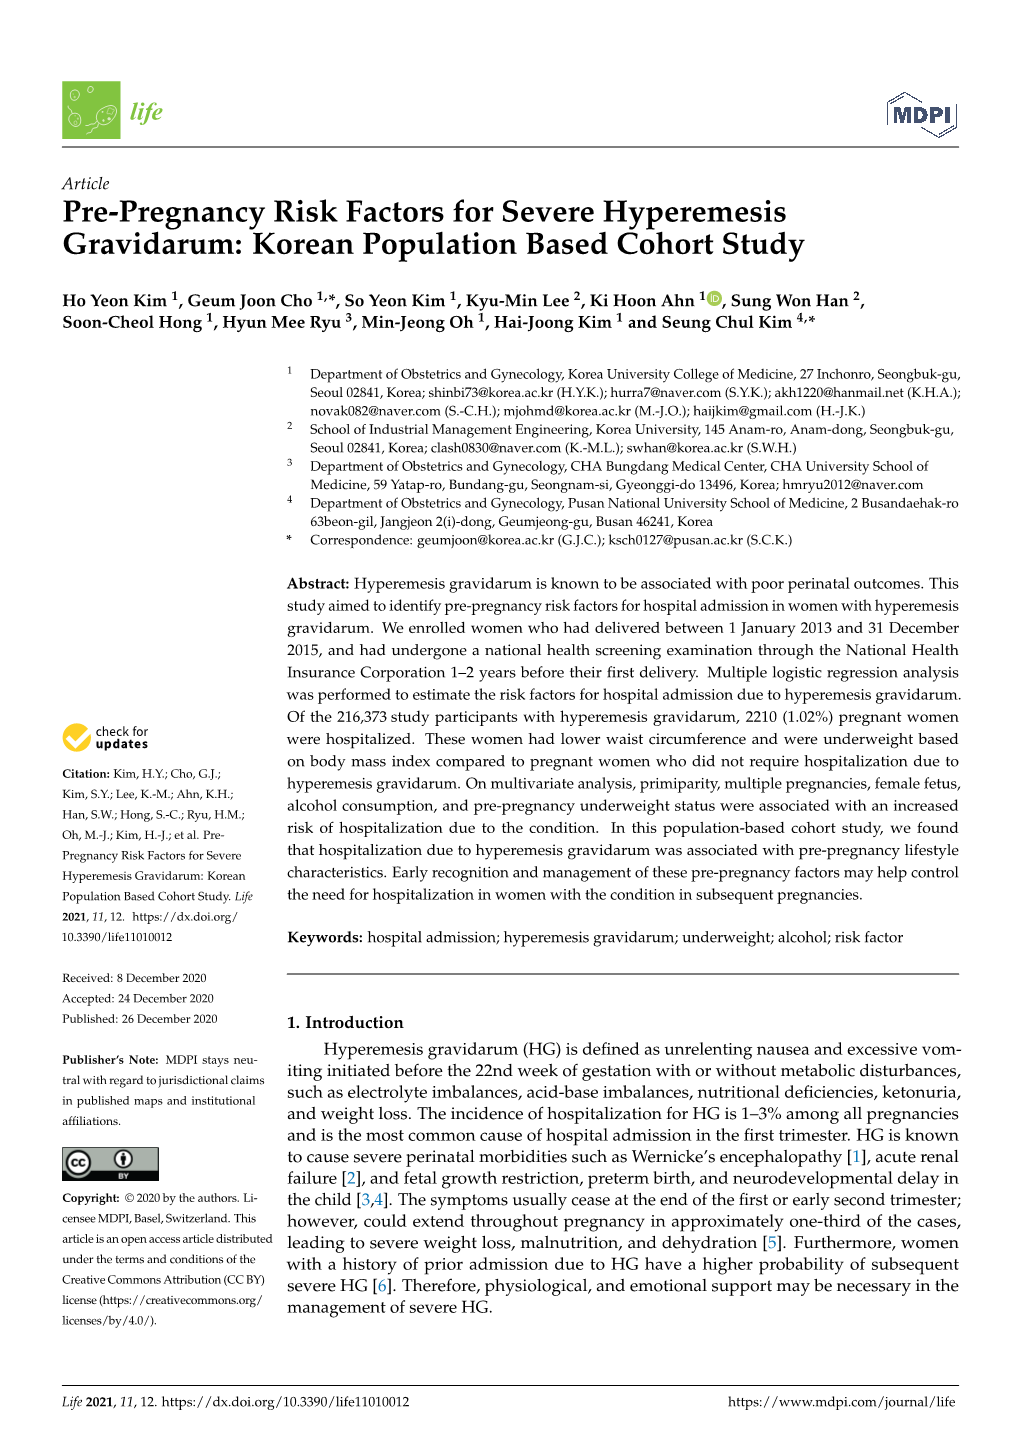 Pre-Pregnancy Risk Factors for Severe Hyperemesis Gravidarum: Korean Population Based Cohort Study